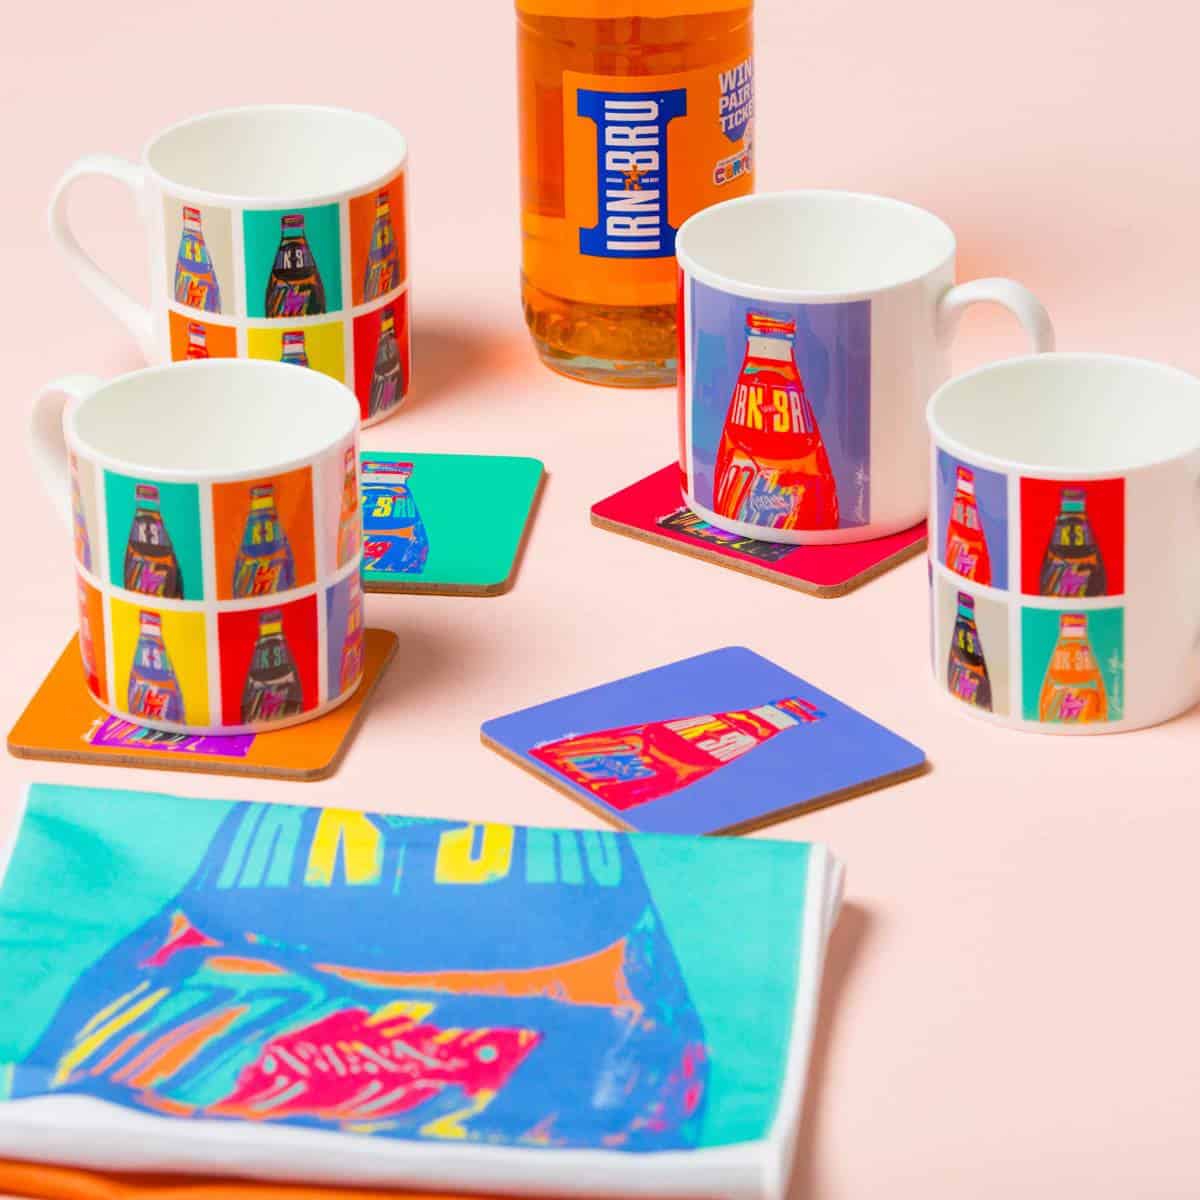 Irn Bru merchandise range by Gillian Kyle